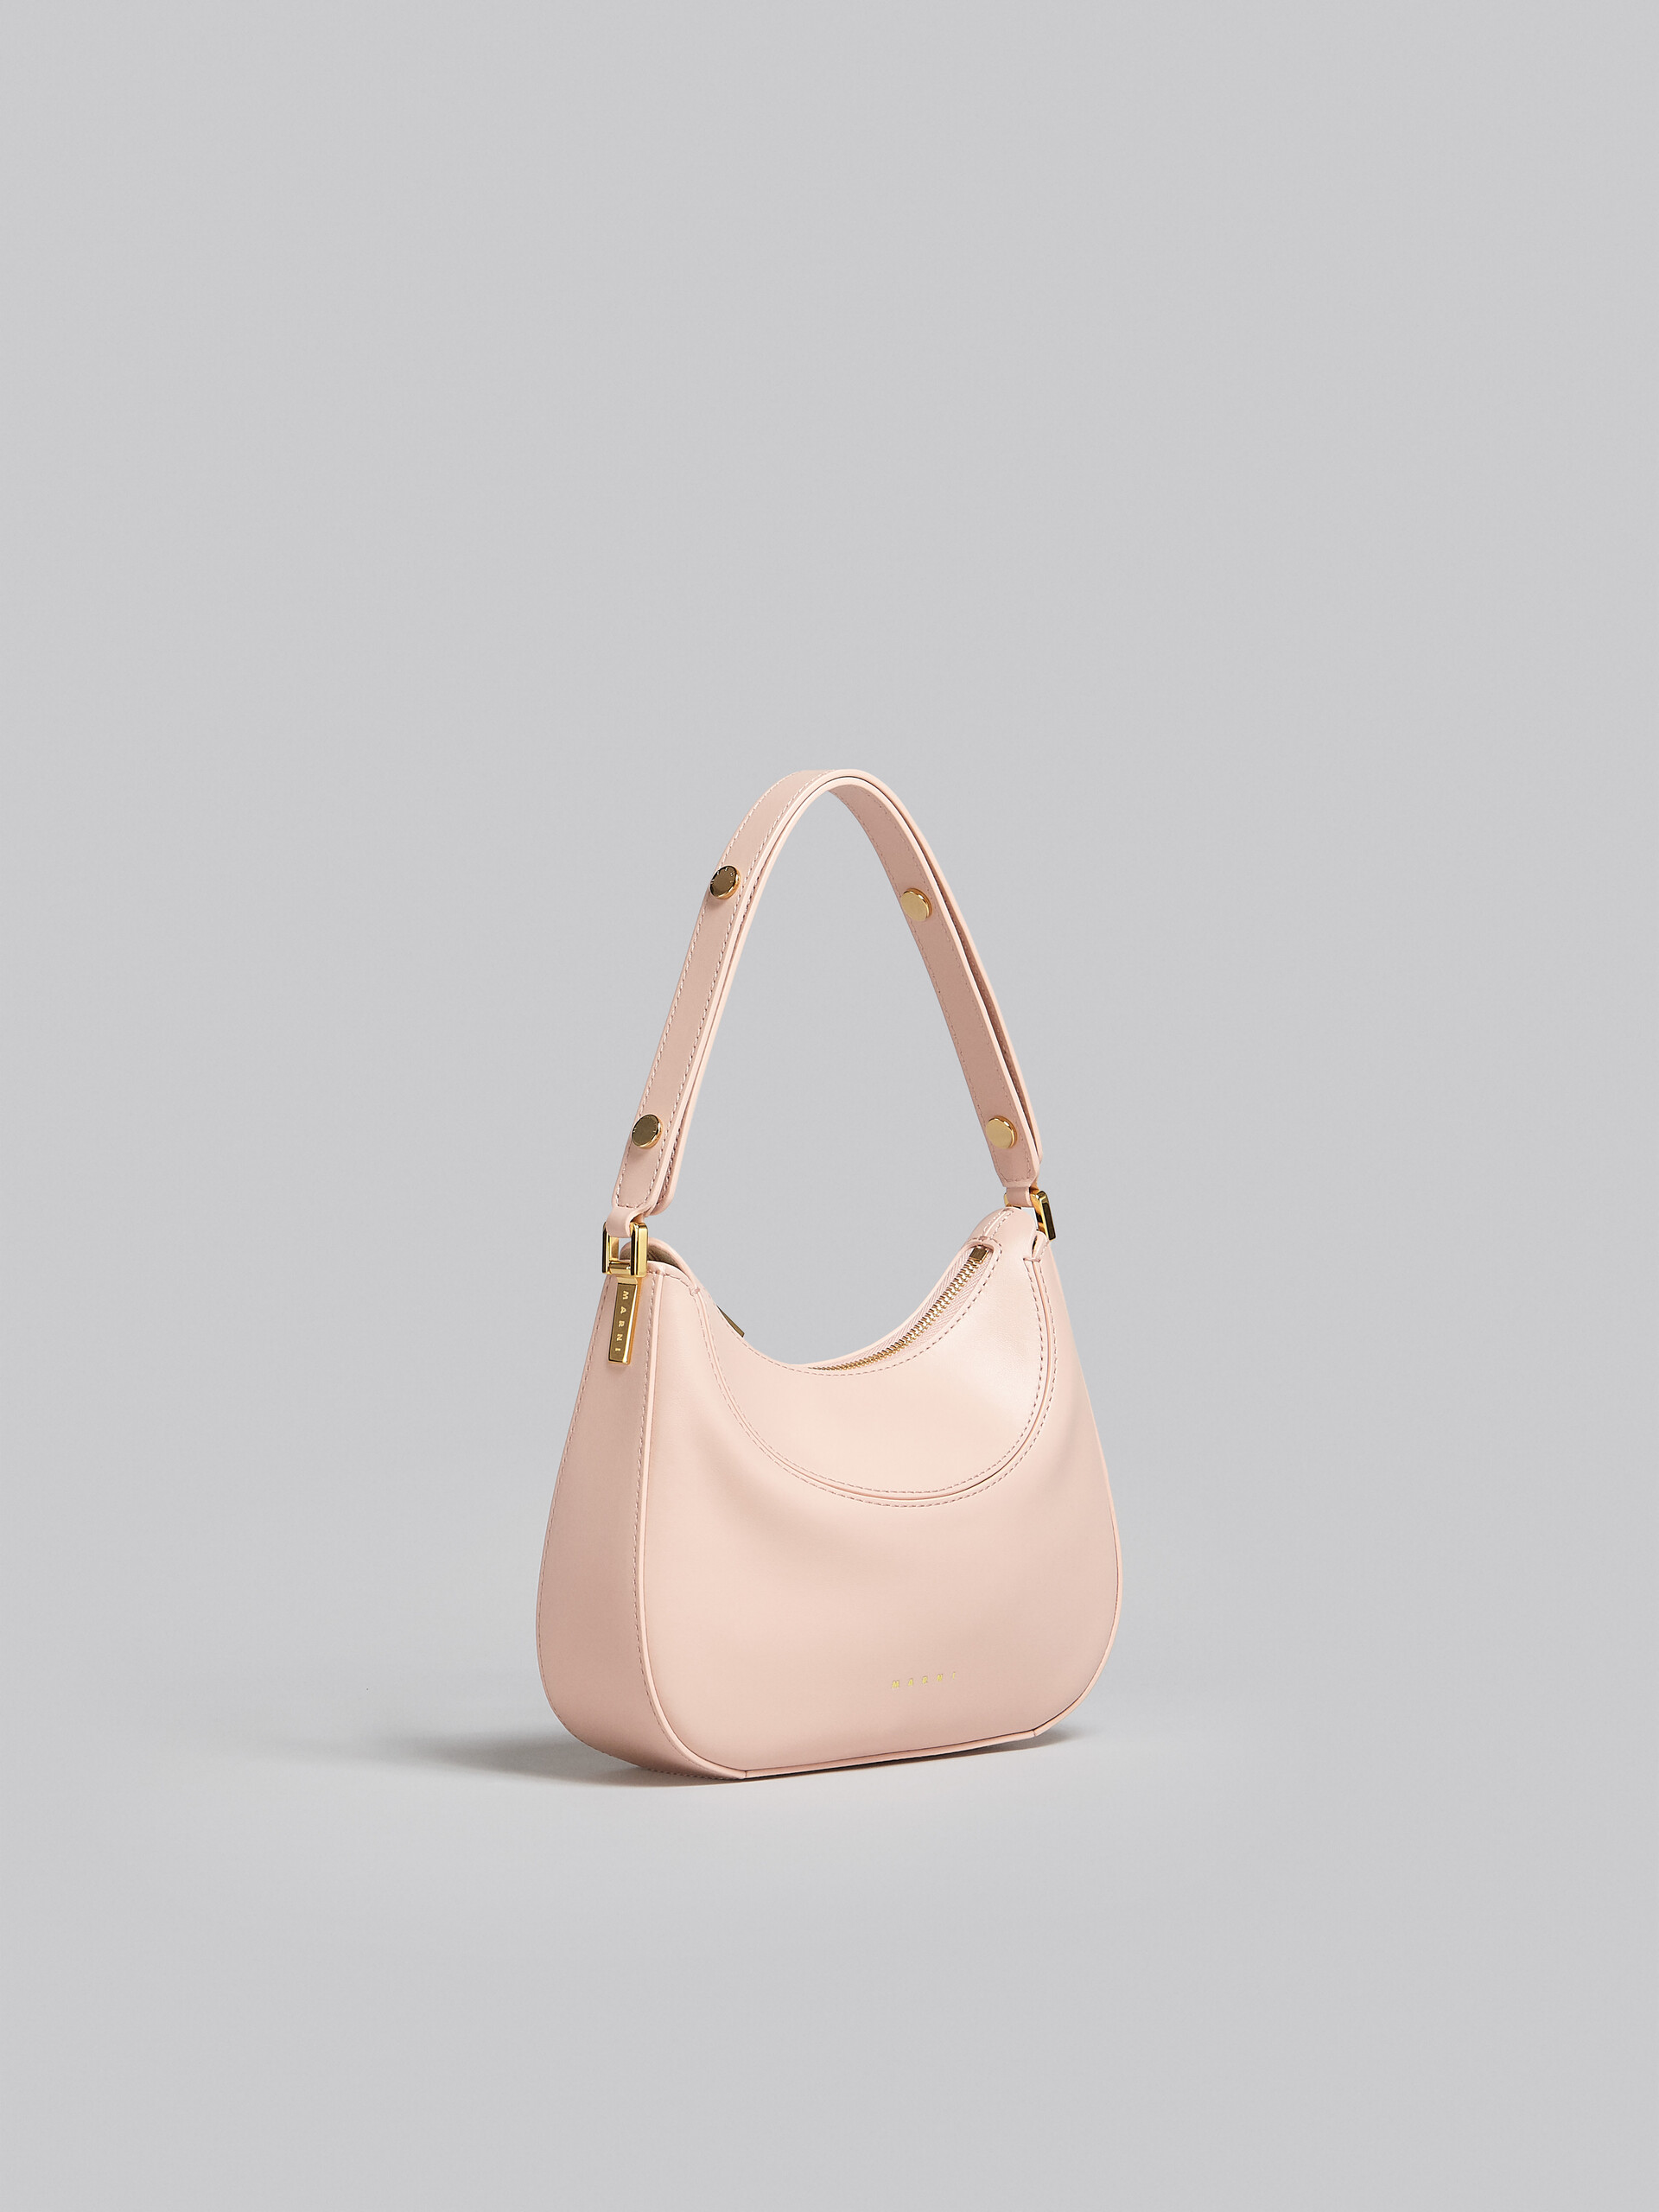 Milano Mini Bag in pink leather - Handbag - Image 5